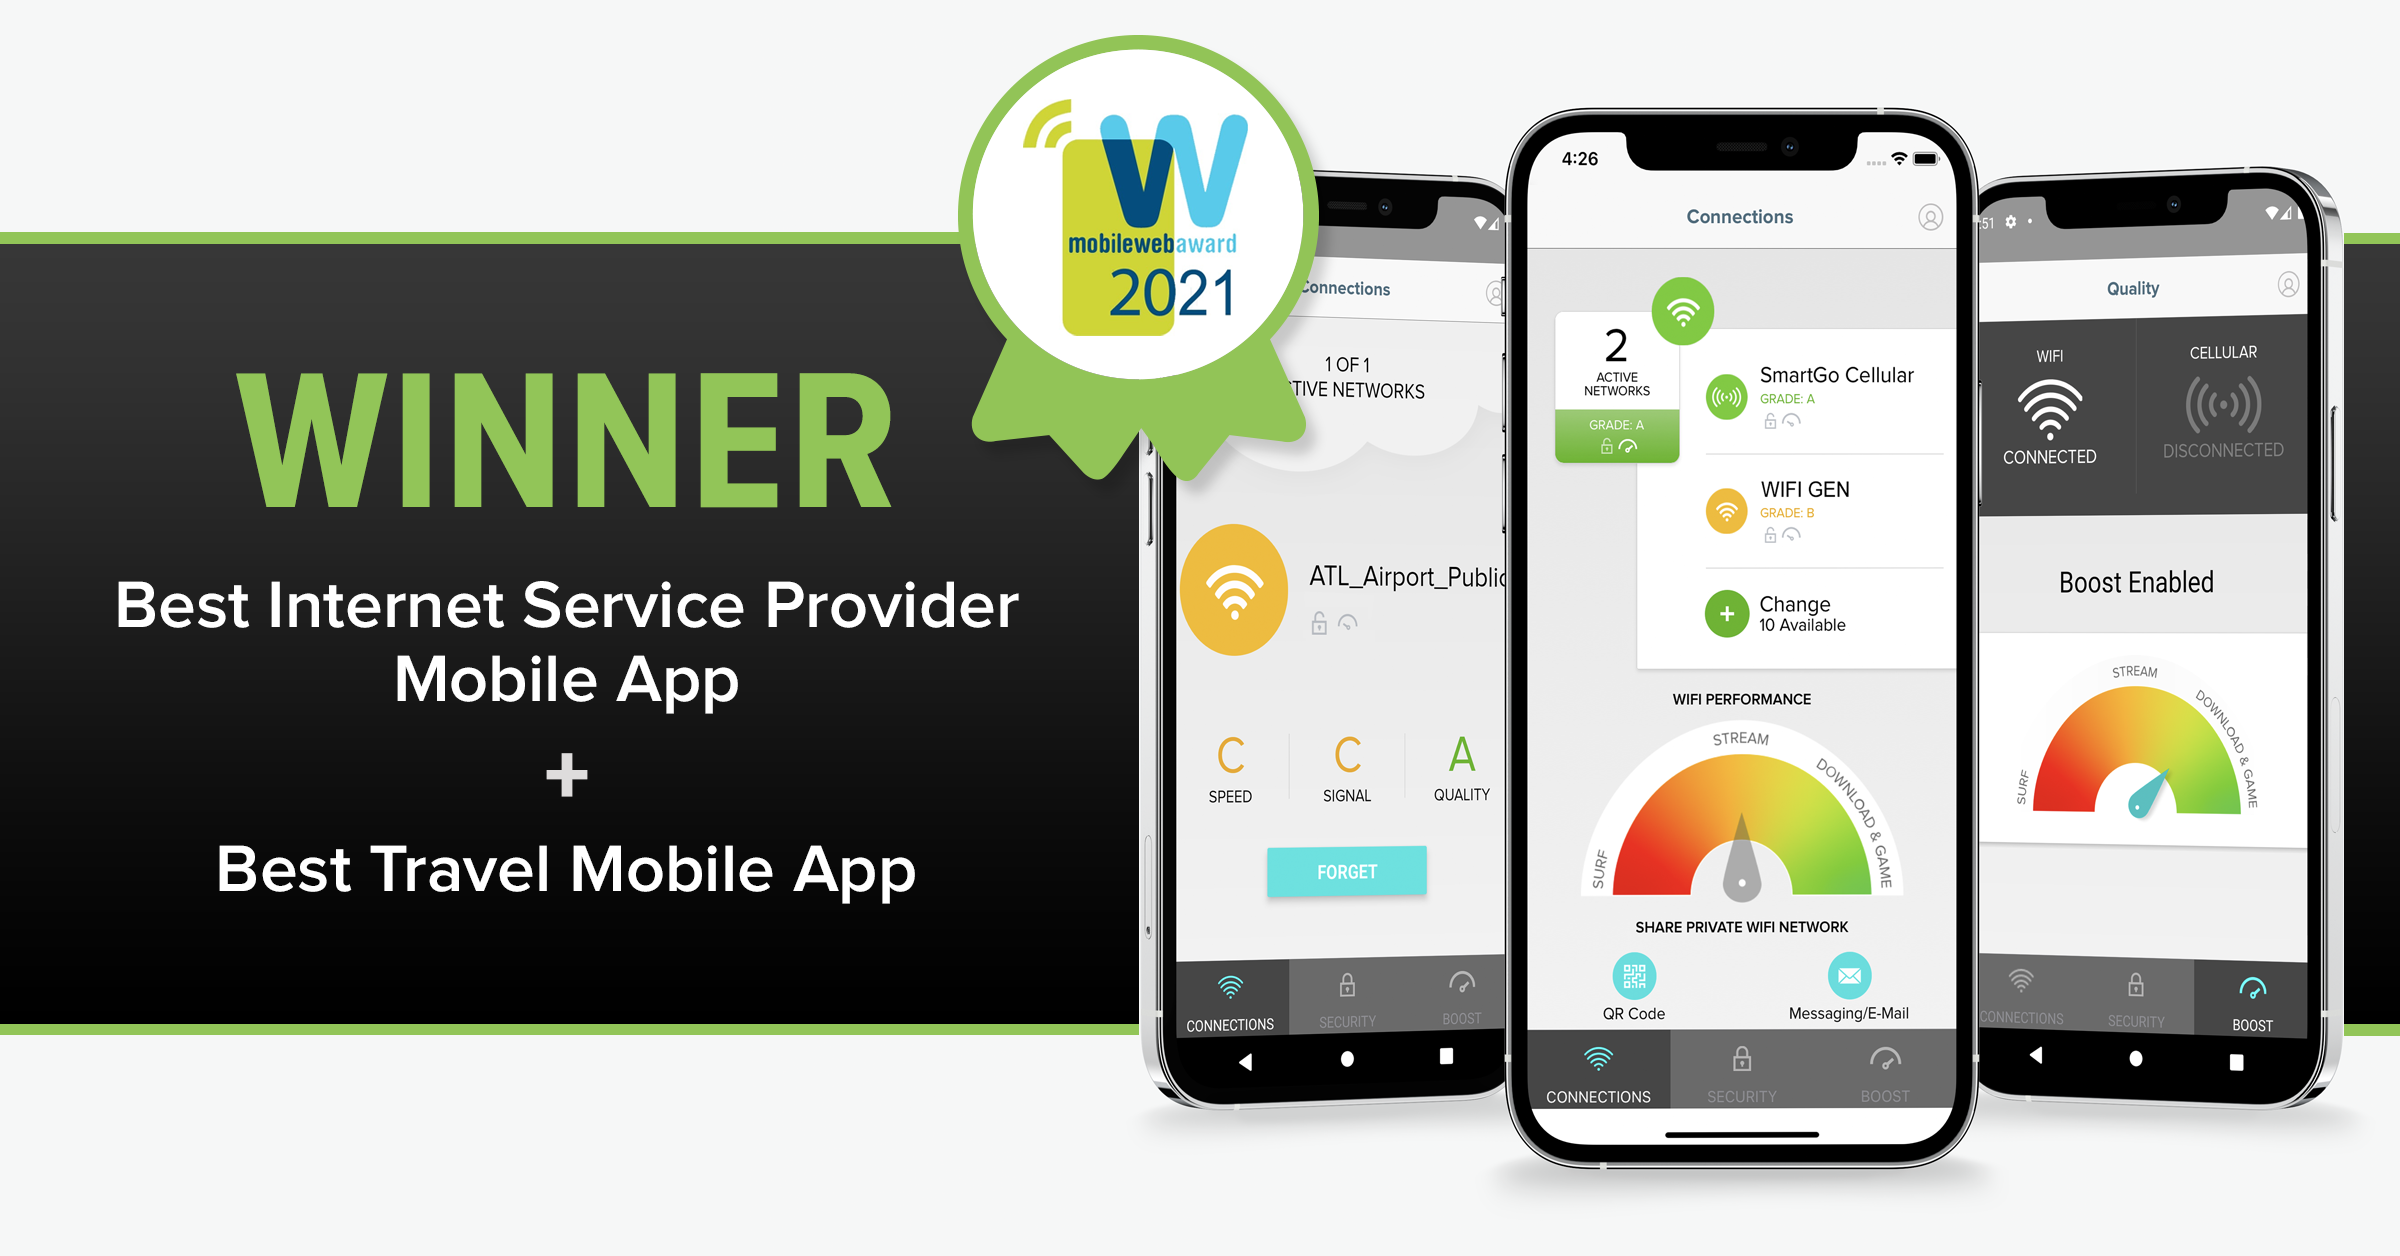 Go Connect GoTravel App Wins Best Travel App and Best Internet Service Provider App Awards